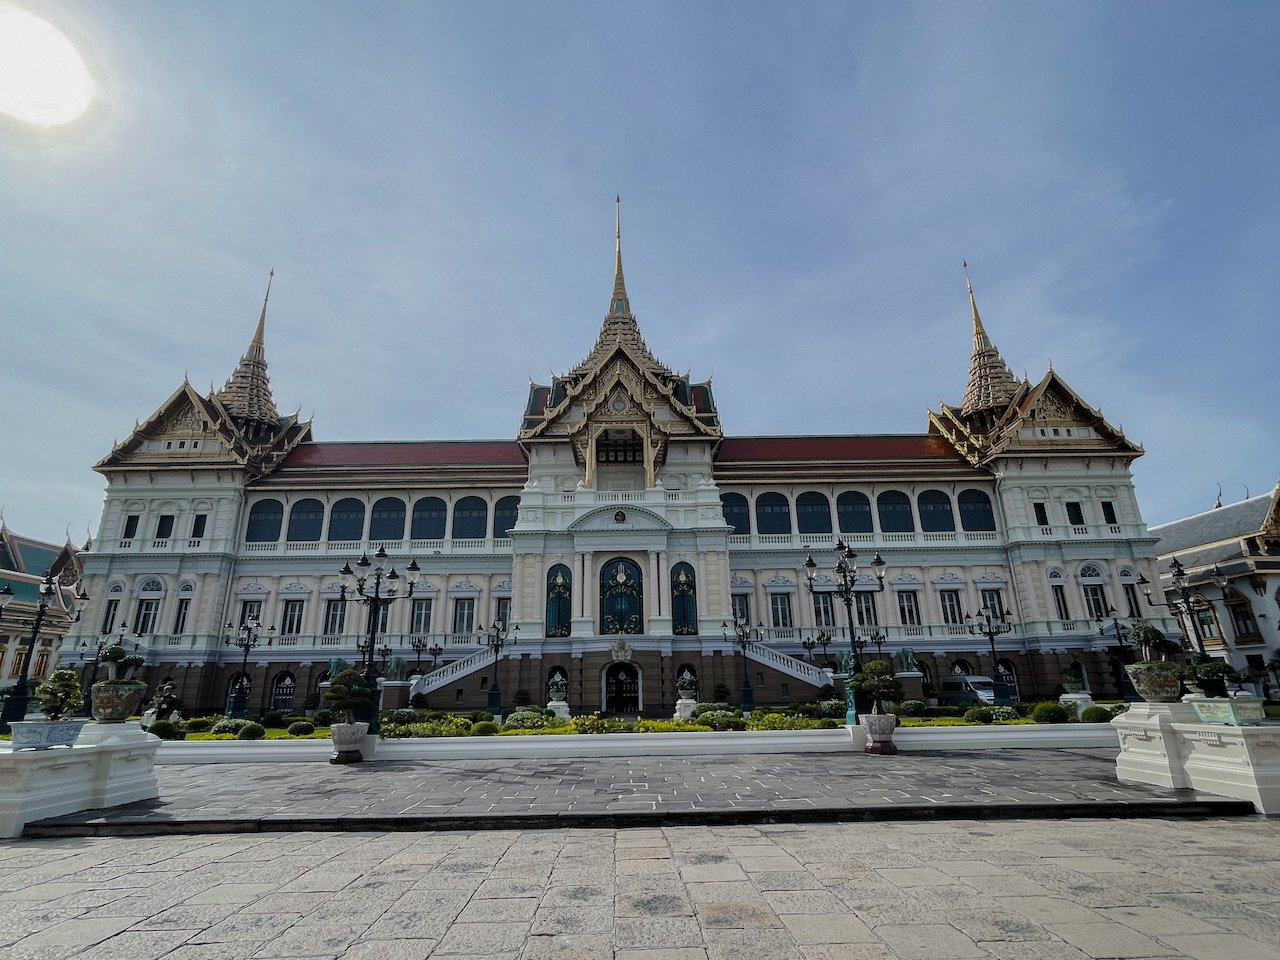 The facade of the Grand Palace - Bangkok - Thailand